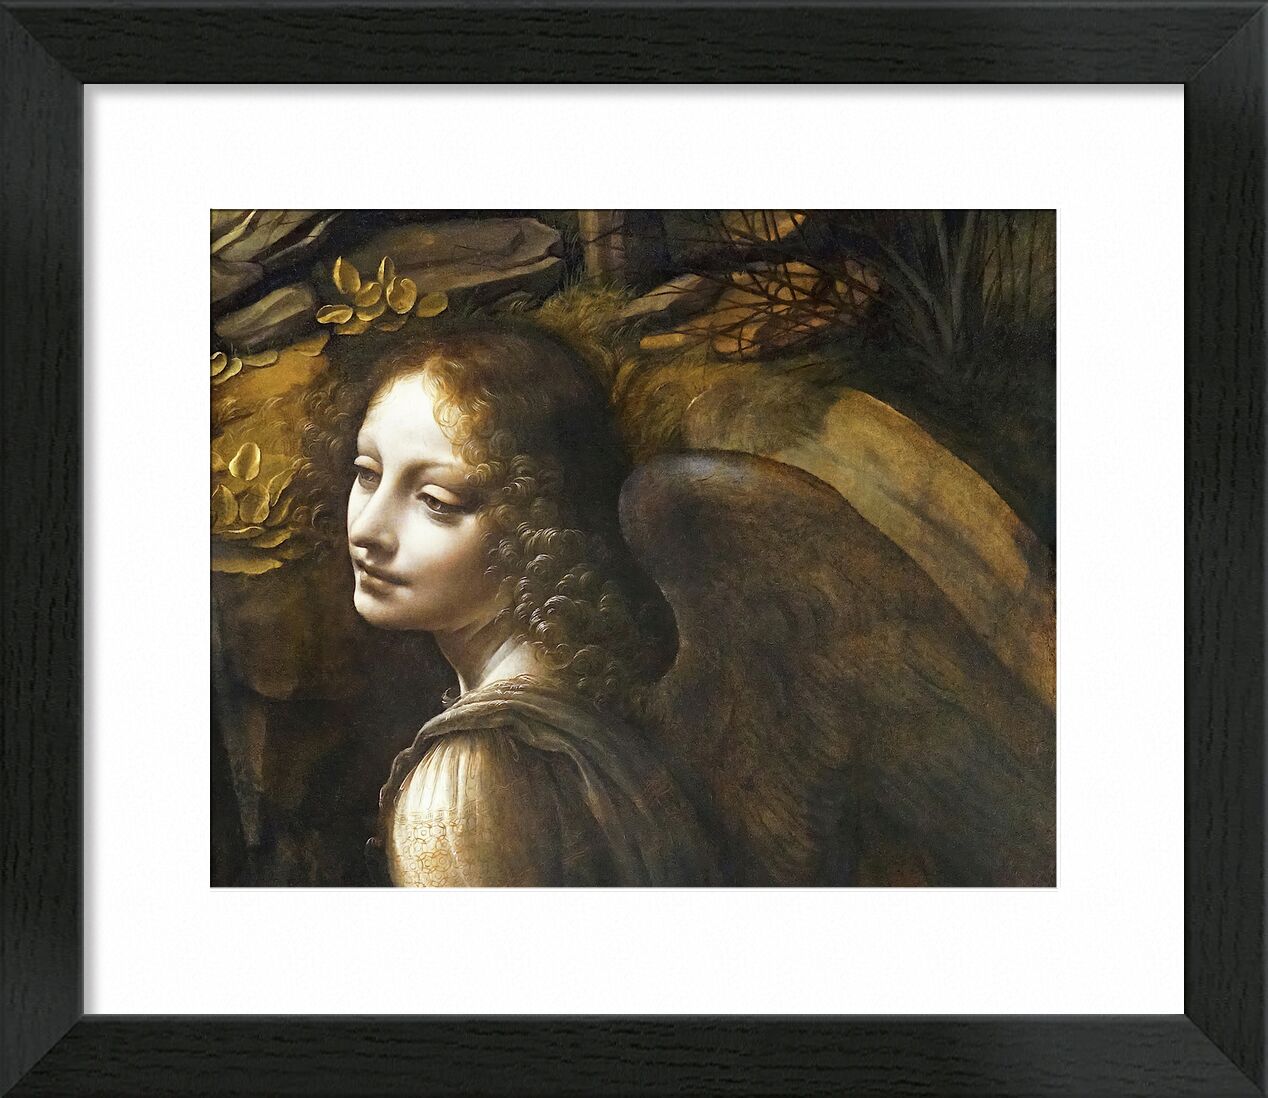 Details of The Angel, The Virgin of the Rocks - Leonardo da Vinci von Bildende Kunst, Prodi Art, lockig, Frau, flügel, Porträt, Malerei, ange, Leonard de Vinci